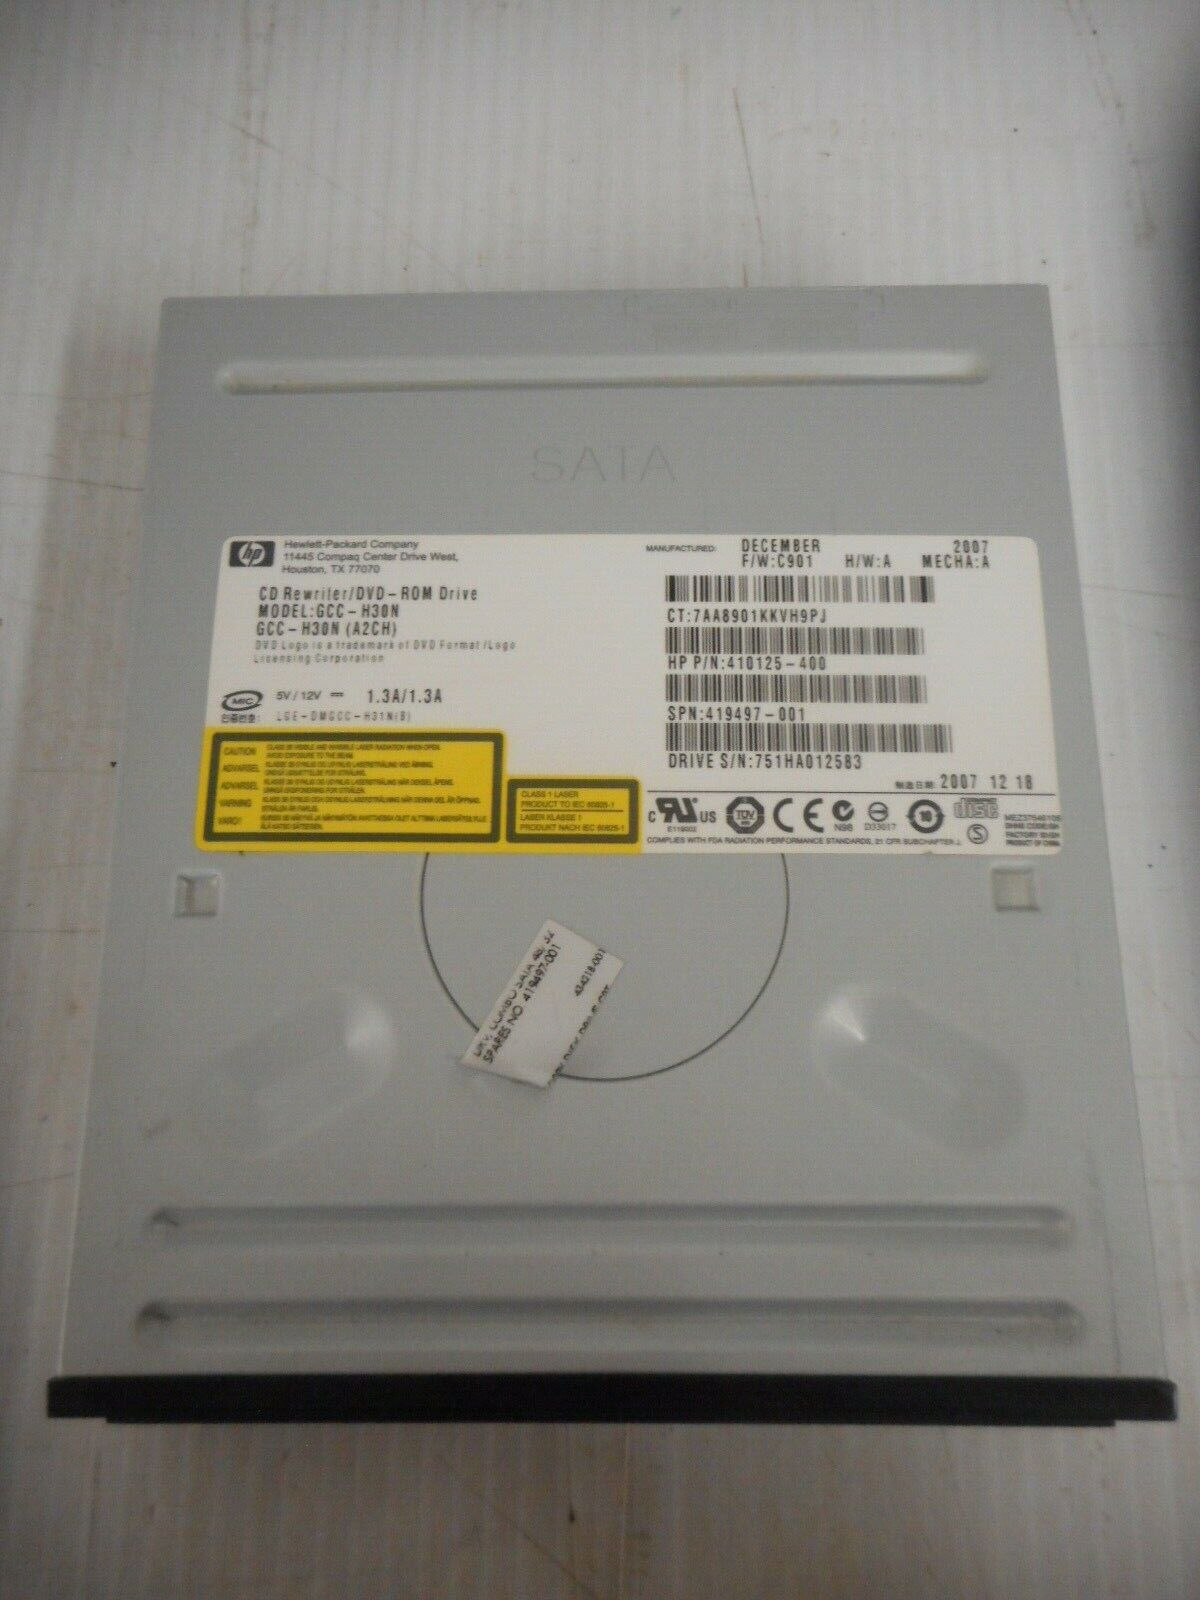 HP SATA CD Rewriter DVD ROM Drive Model GCC-H30N